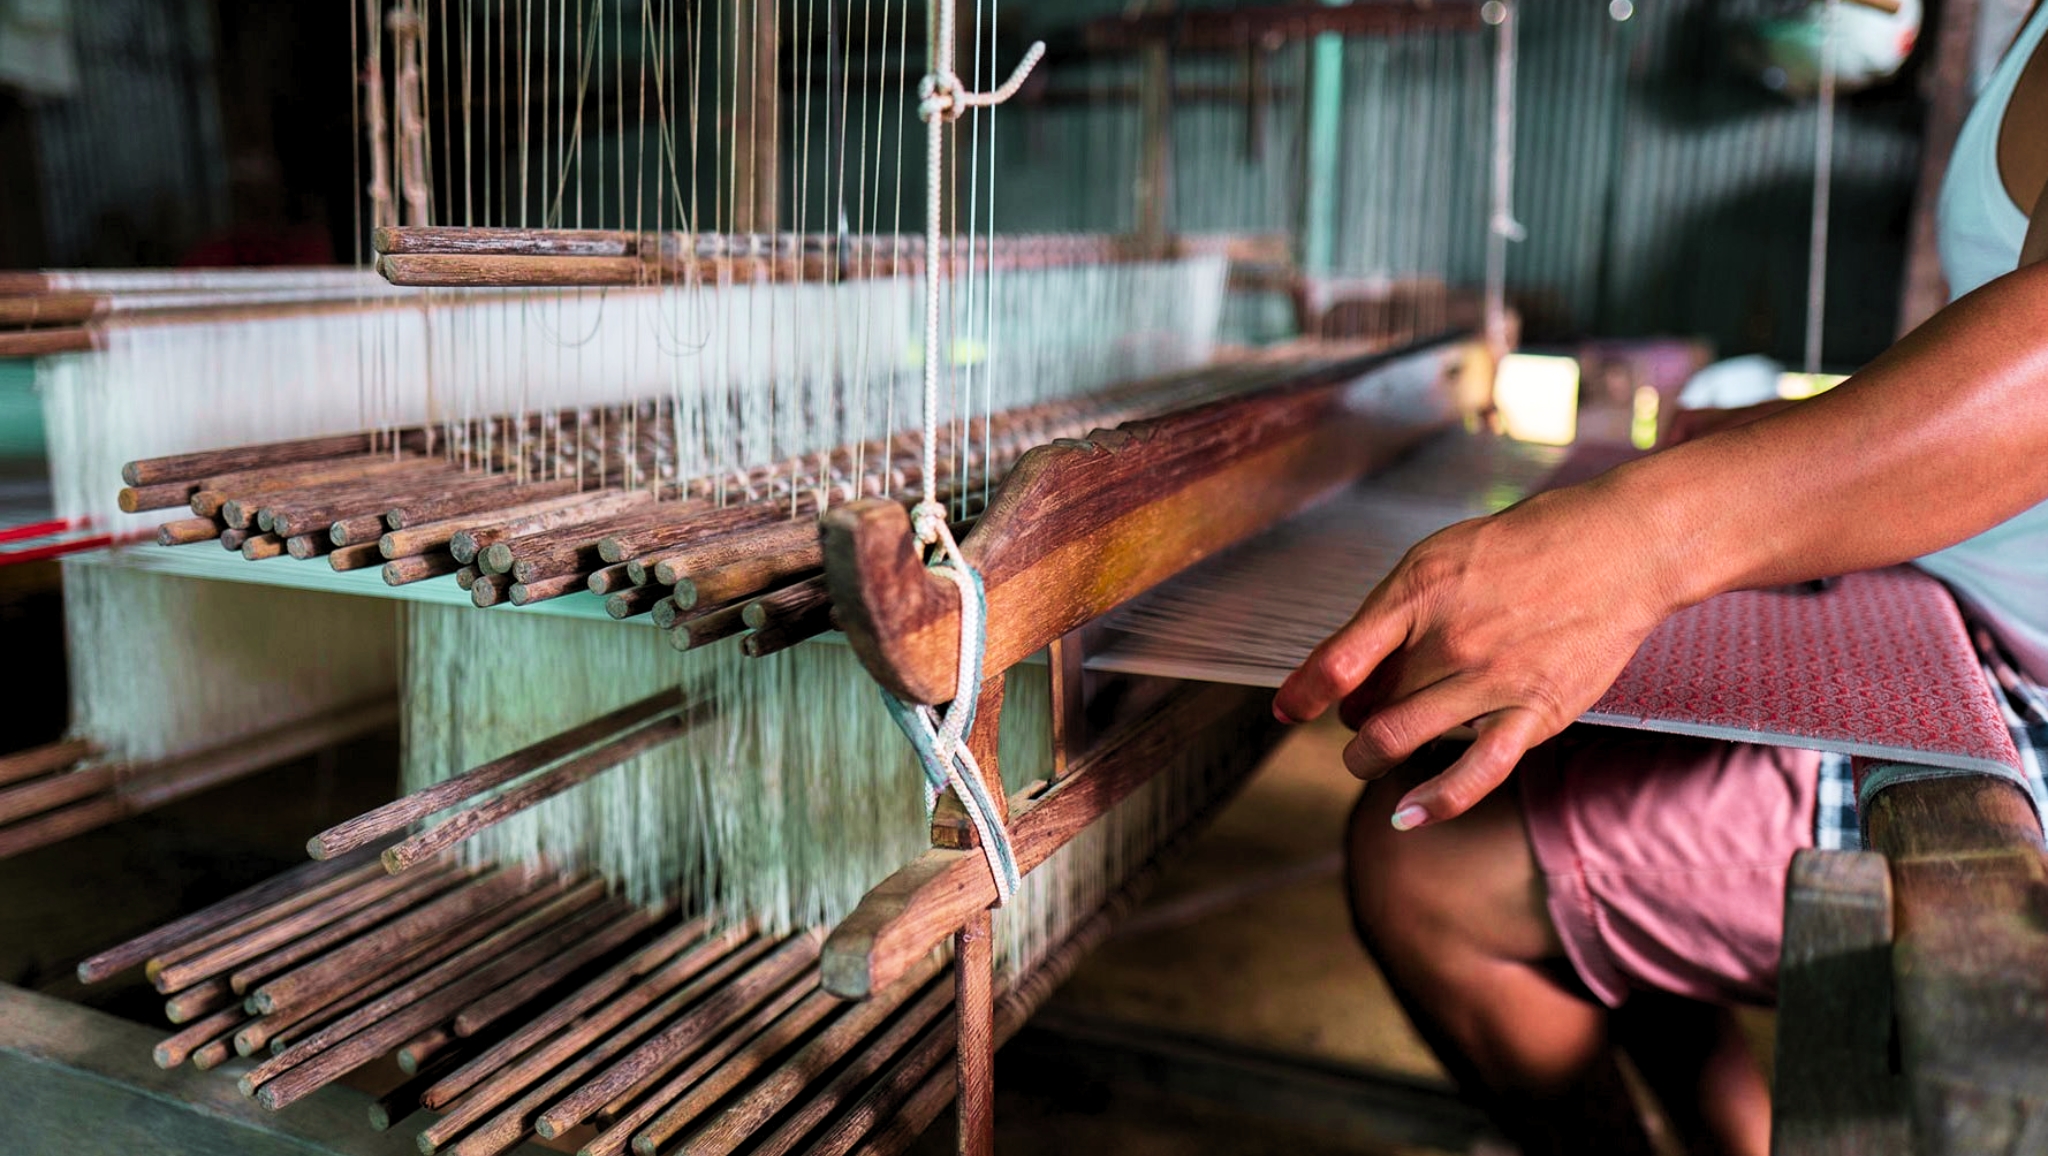 Witness Waving Process In Hong Ngu Village